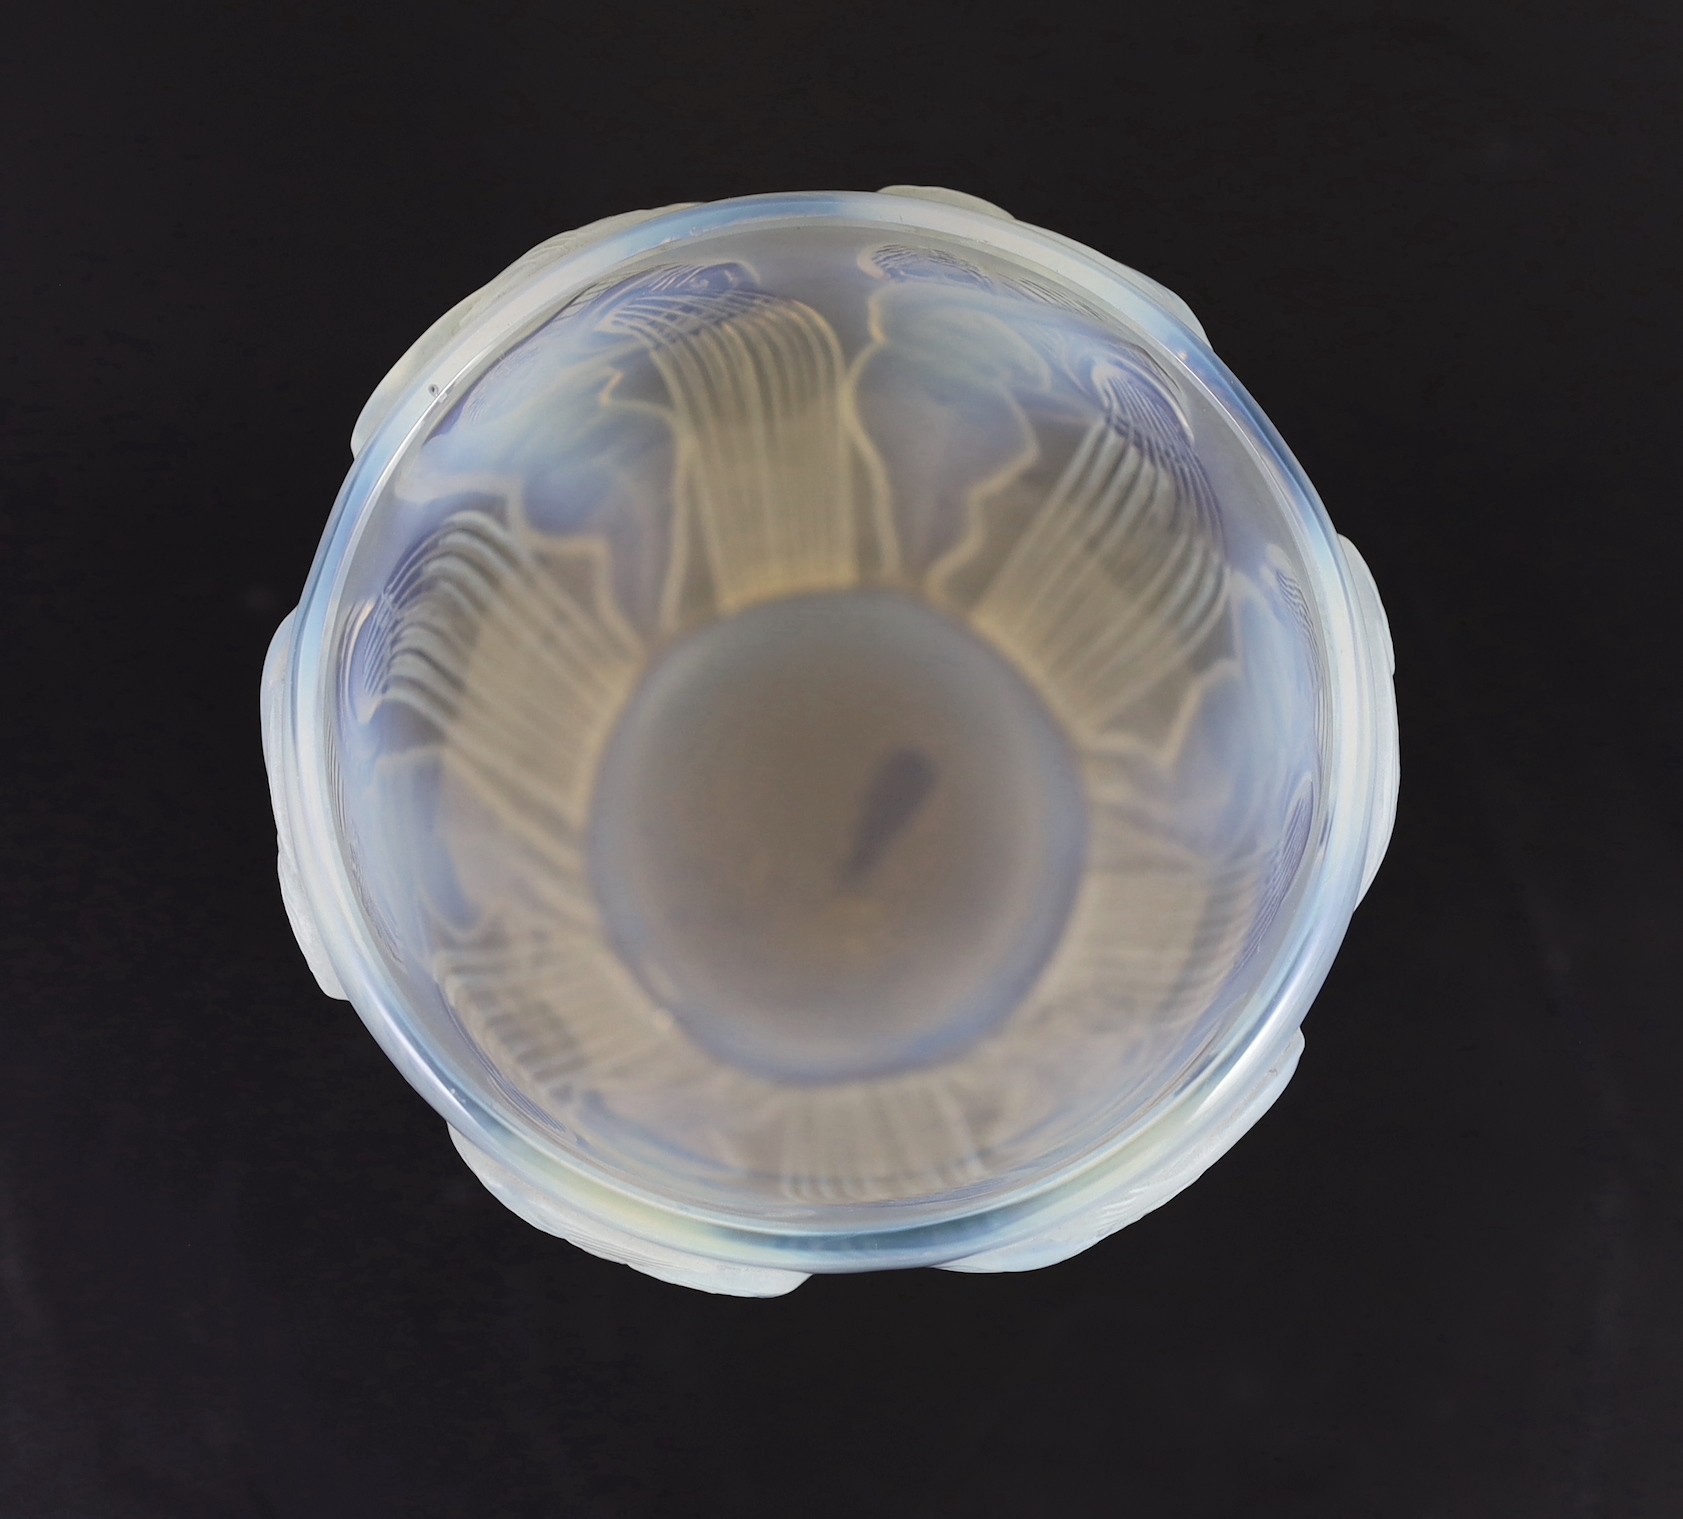 An R. Lalique glass ‘Danaides’ opalescent glass vase, engraved mark ‘R. LALIQUE FRANCE’, Marcilhac No. 972, 18cm high